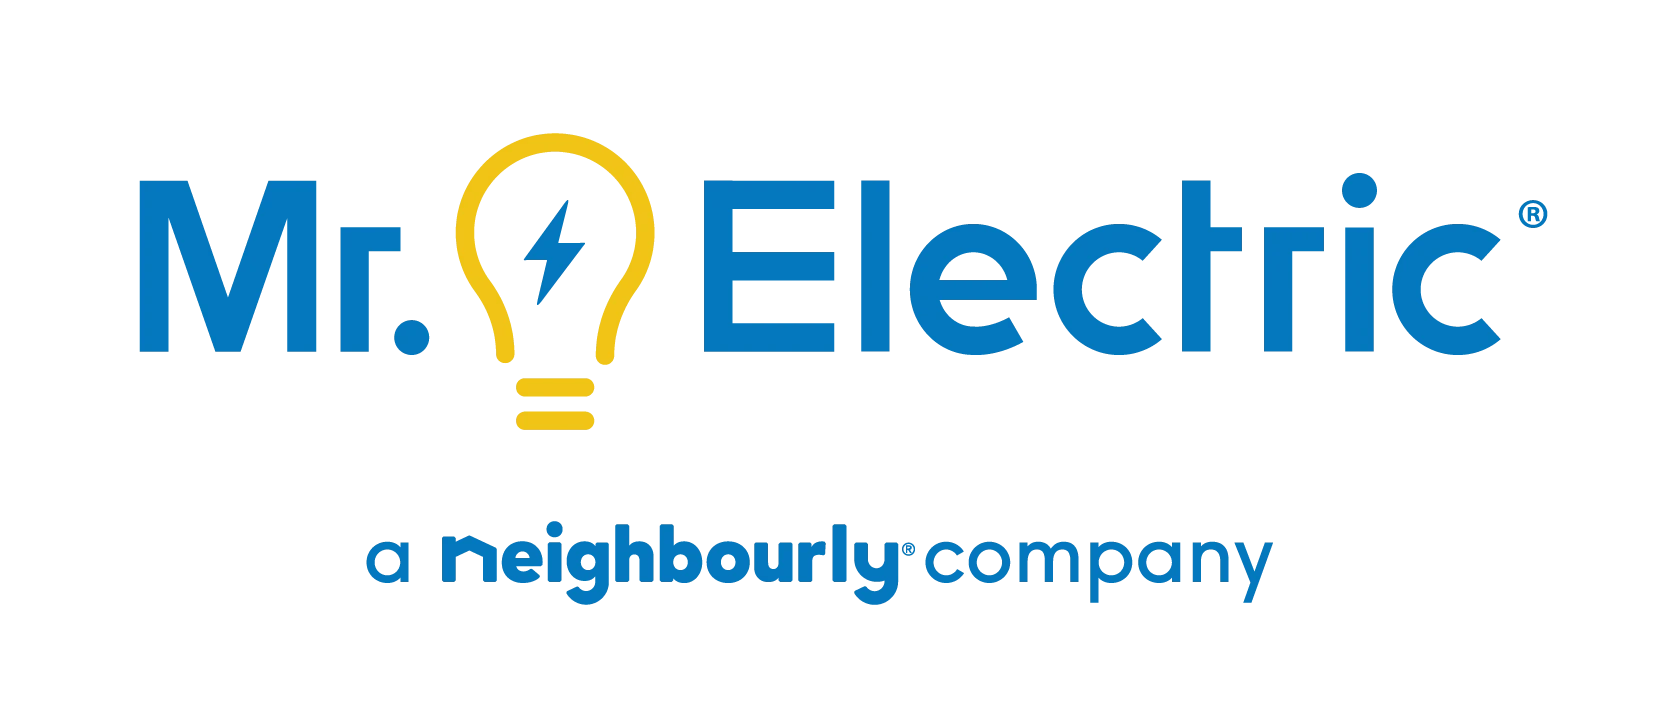 Mr. Electric brand logo.